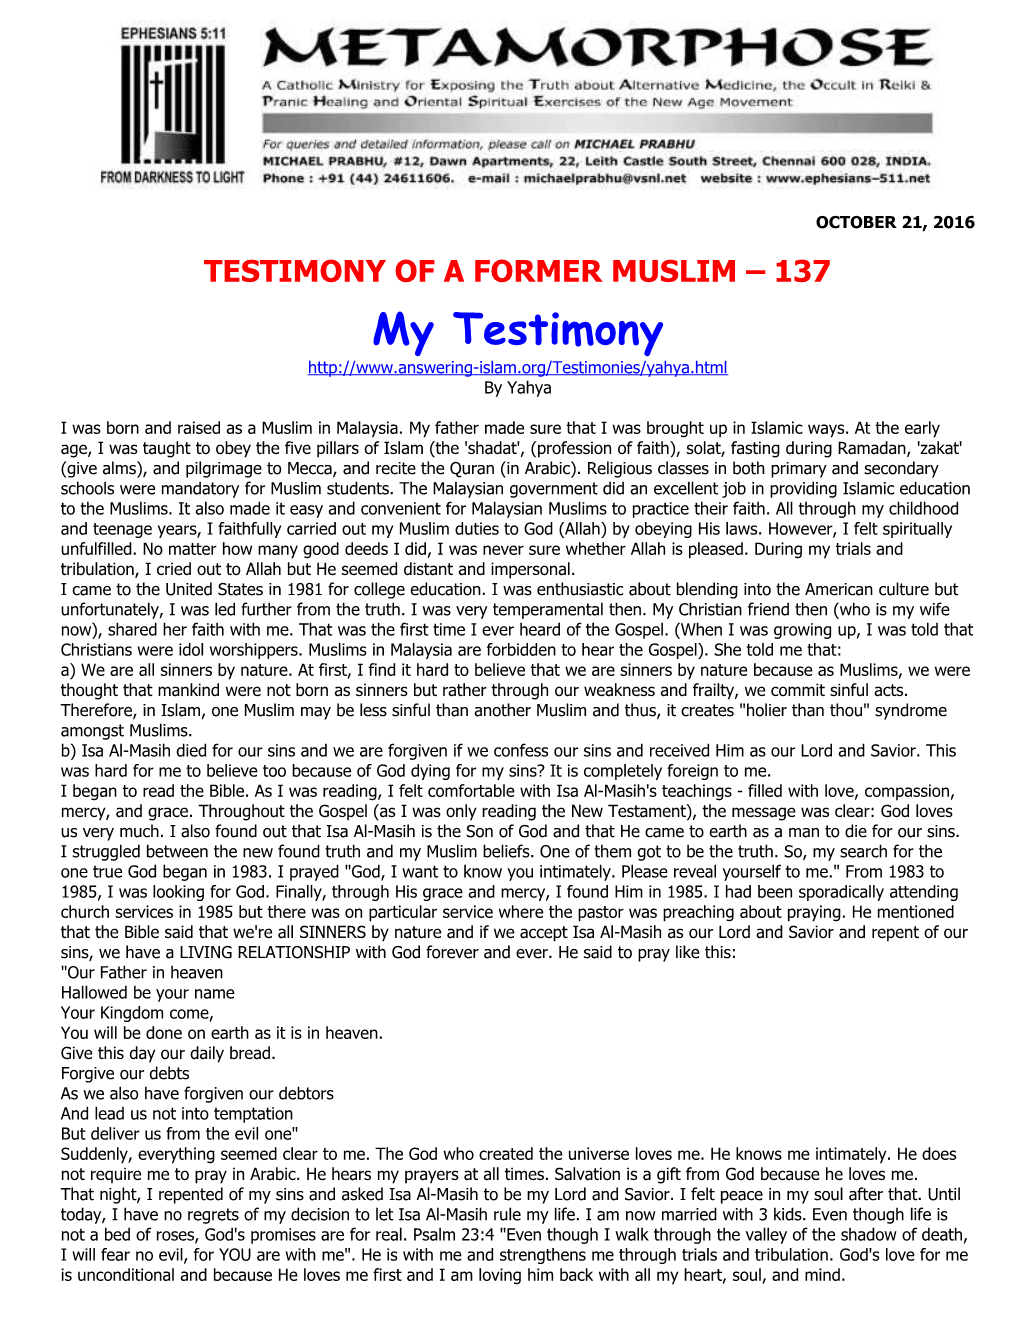 Testimony of a Former Muslim 137